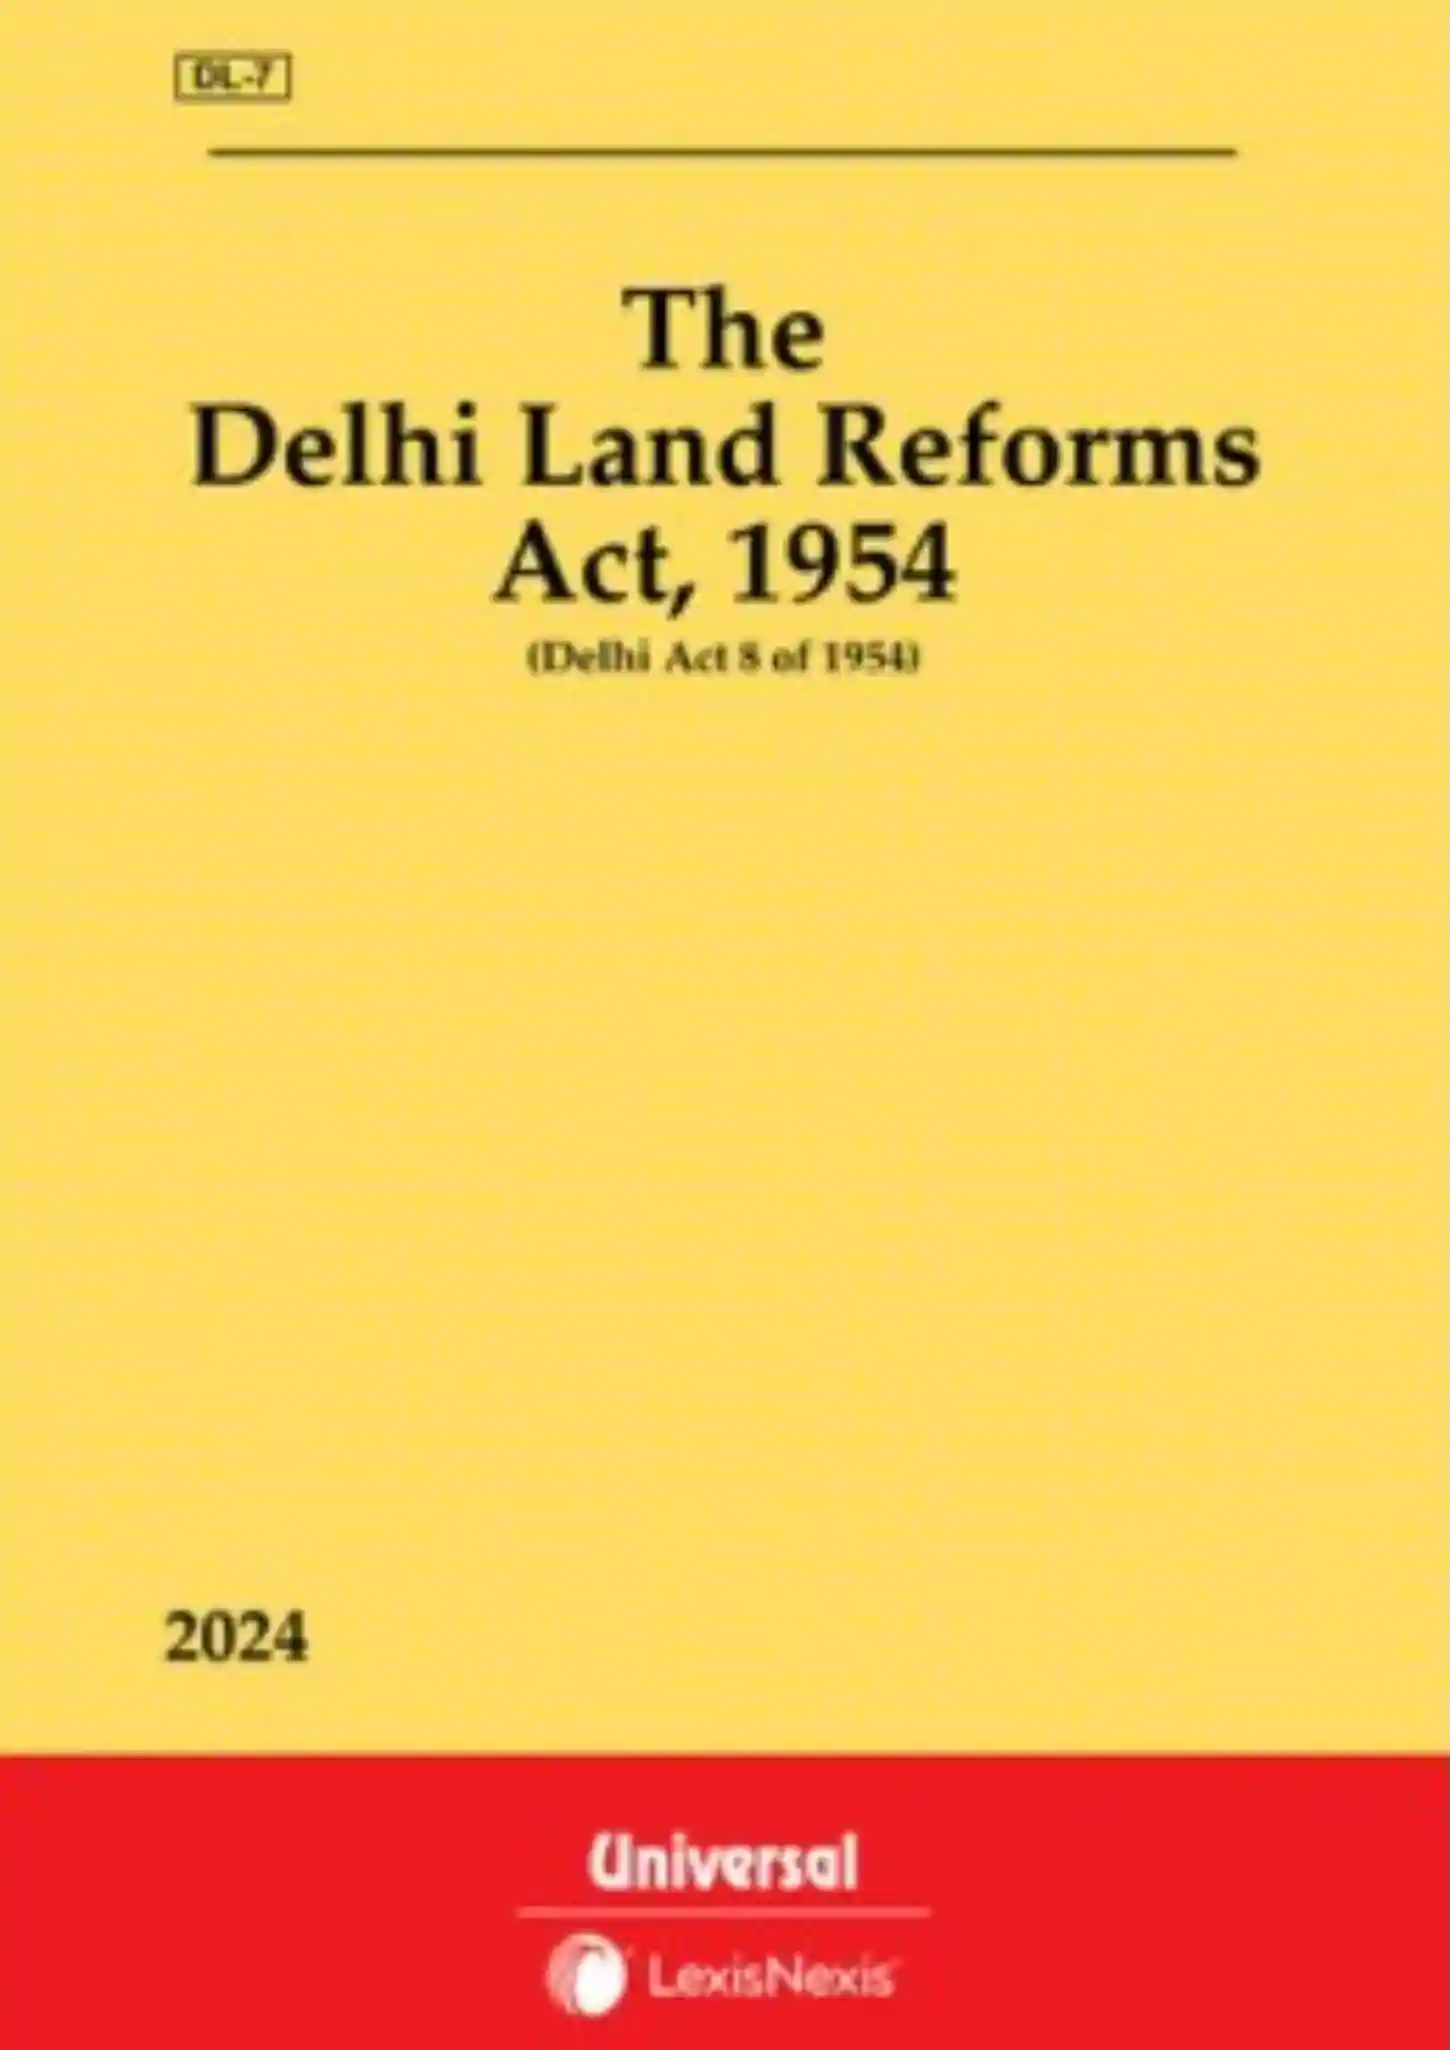 Delhi Land Reforms Act, 1954